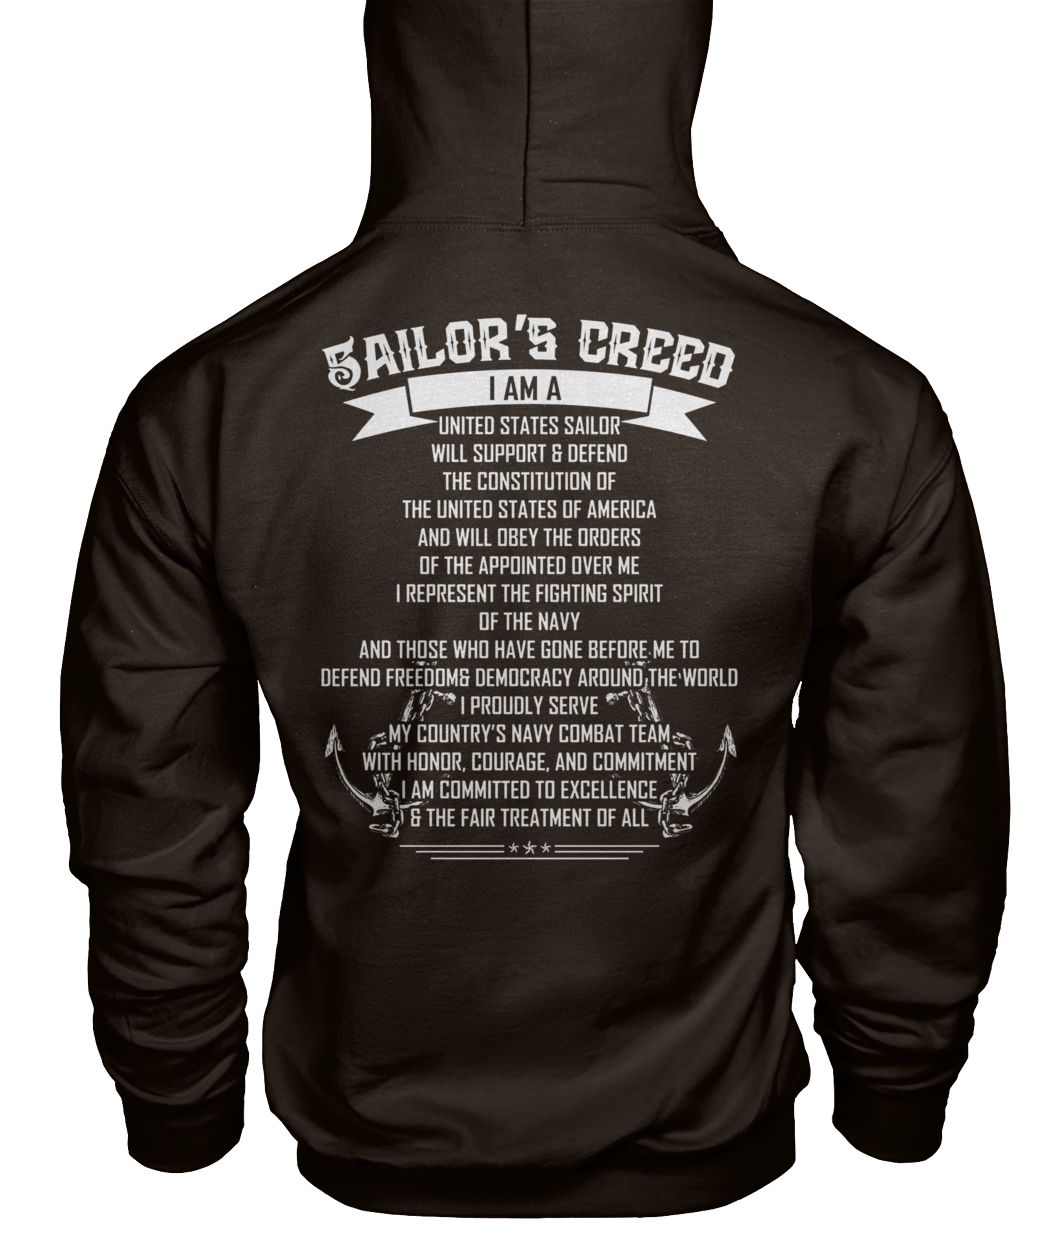 Sailor's creed I am a united states sailor gildan hoodie